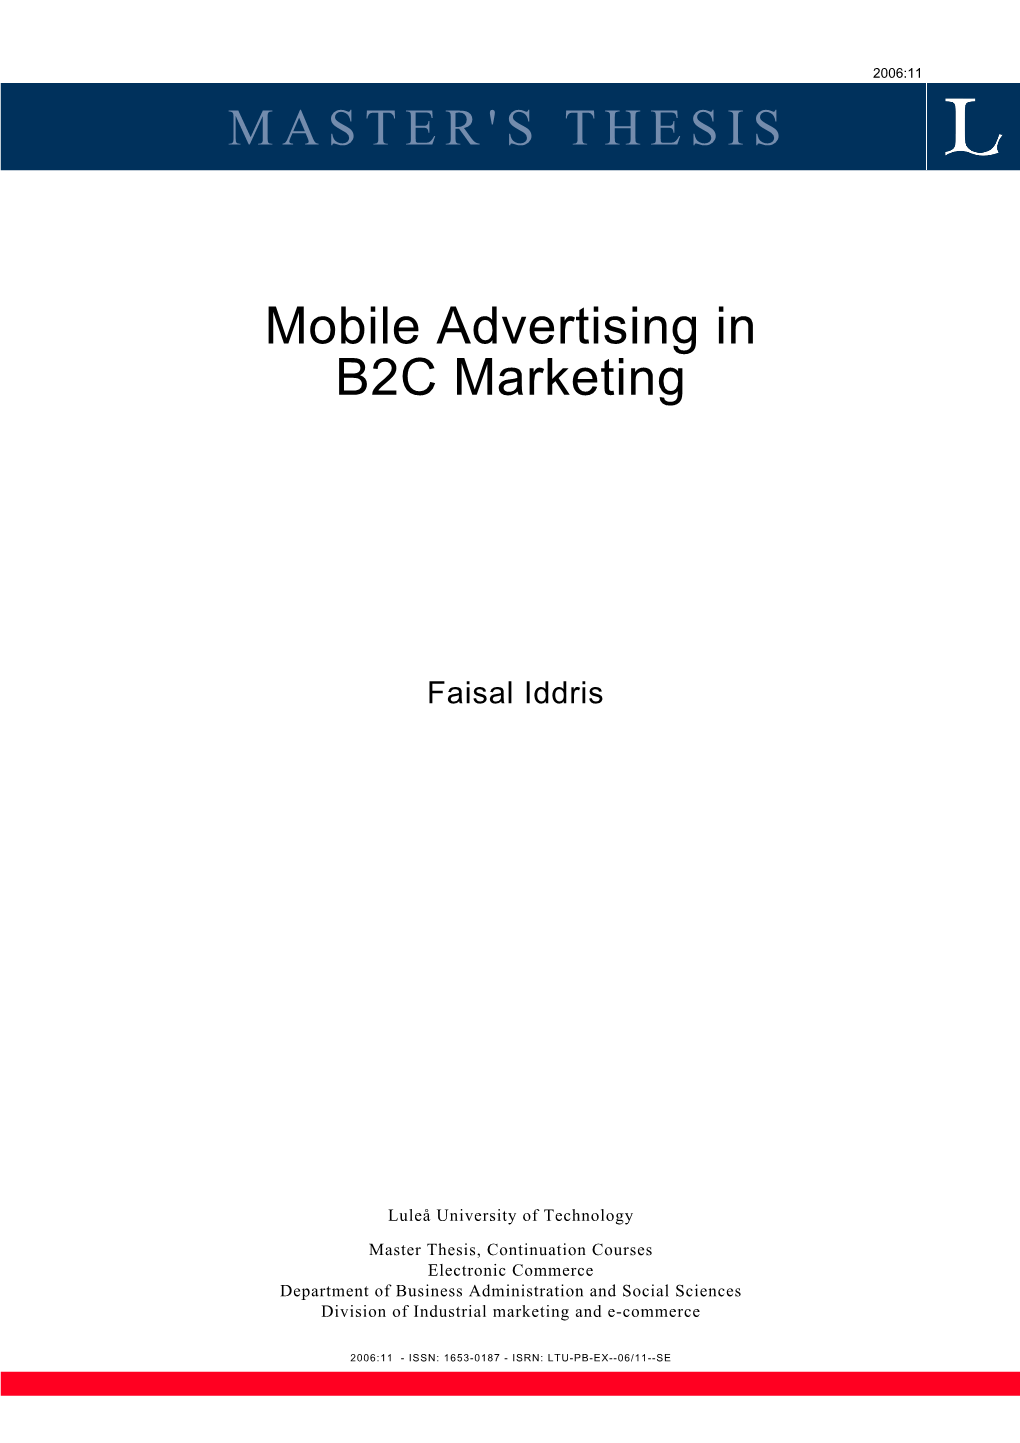 Mobile Advertising in B2C Marketing